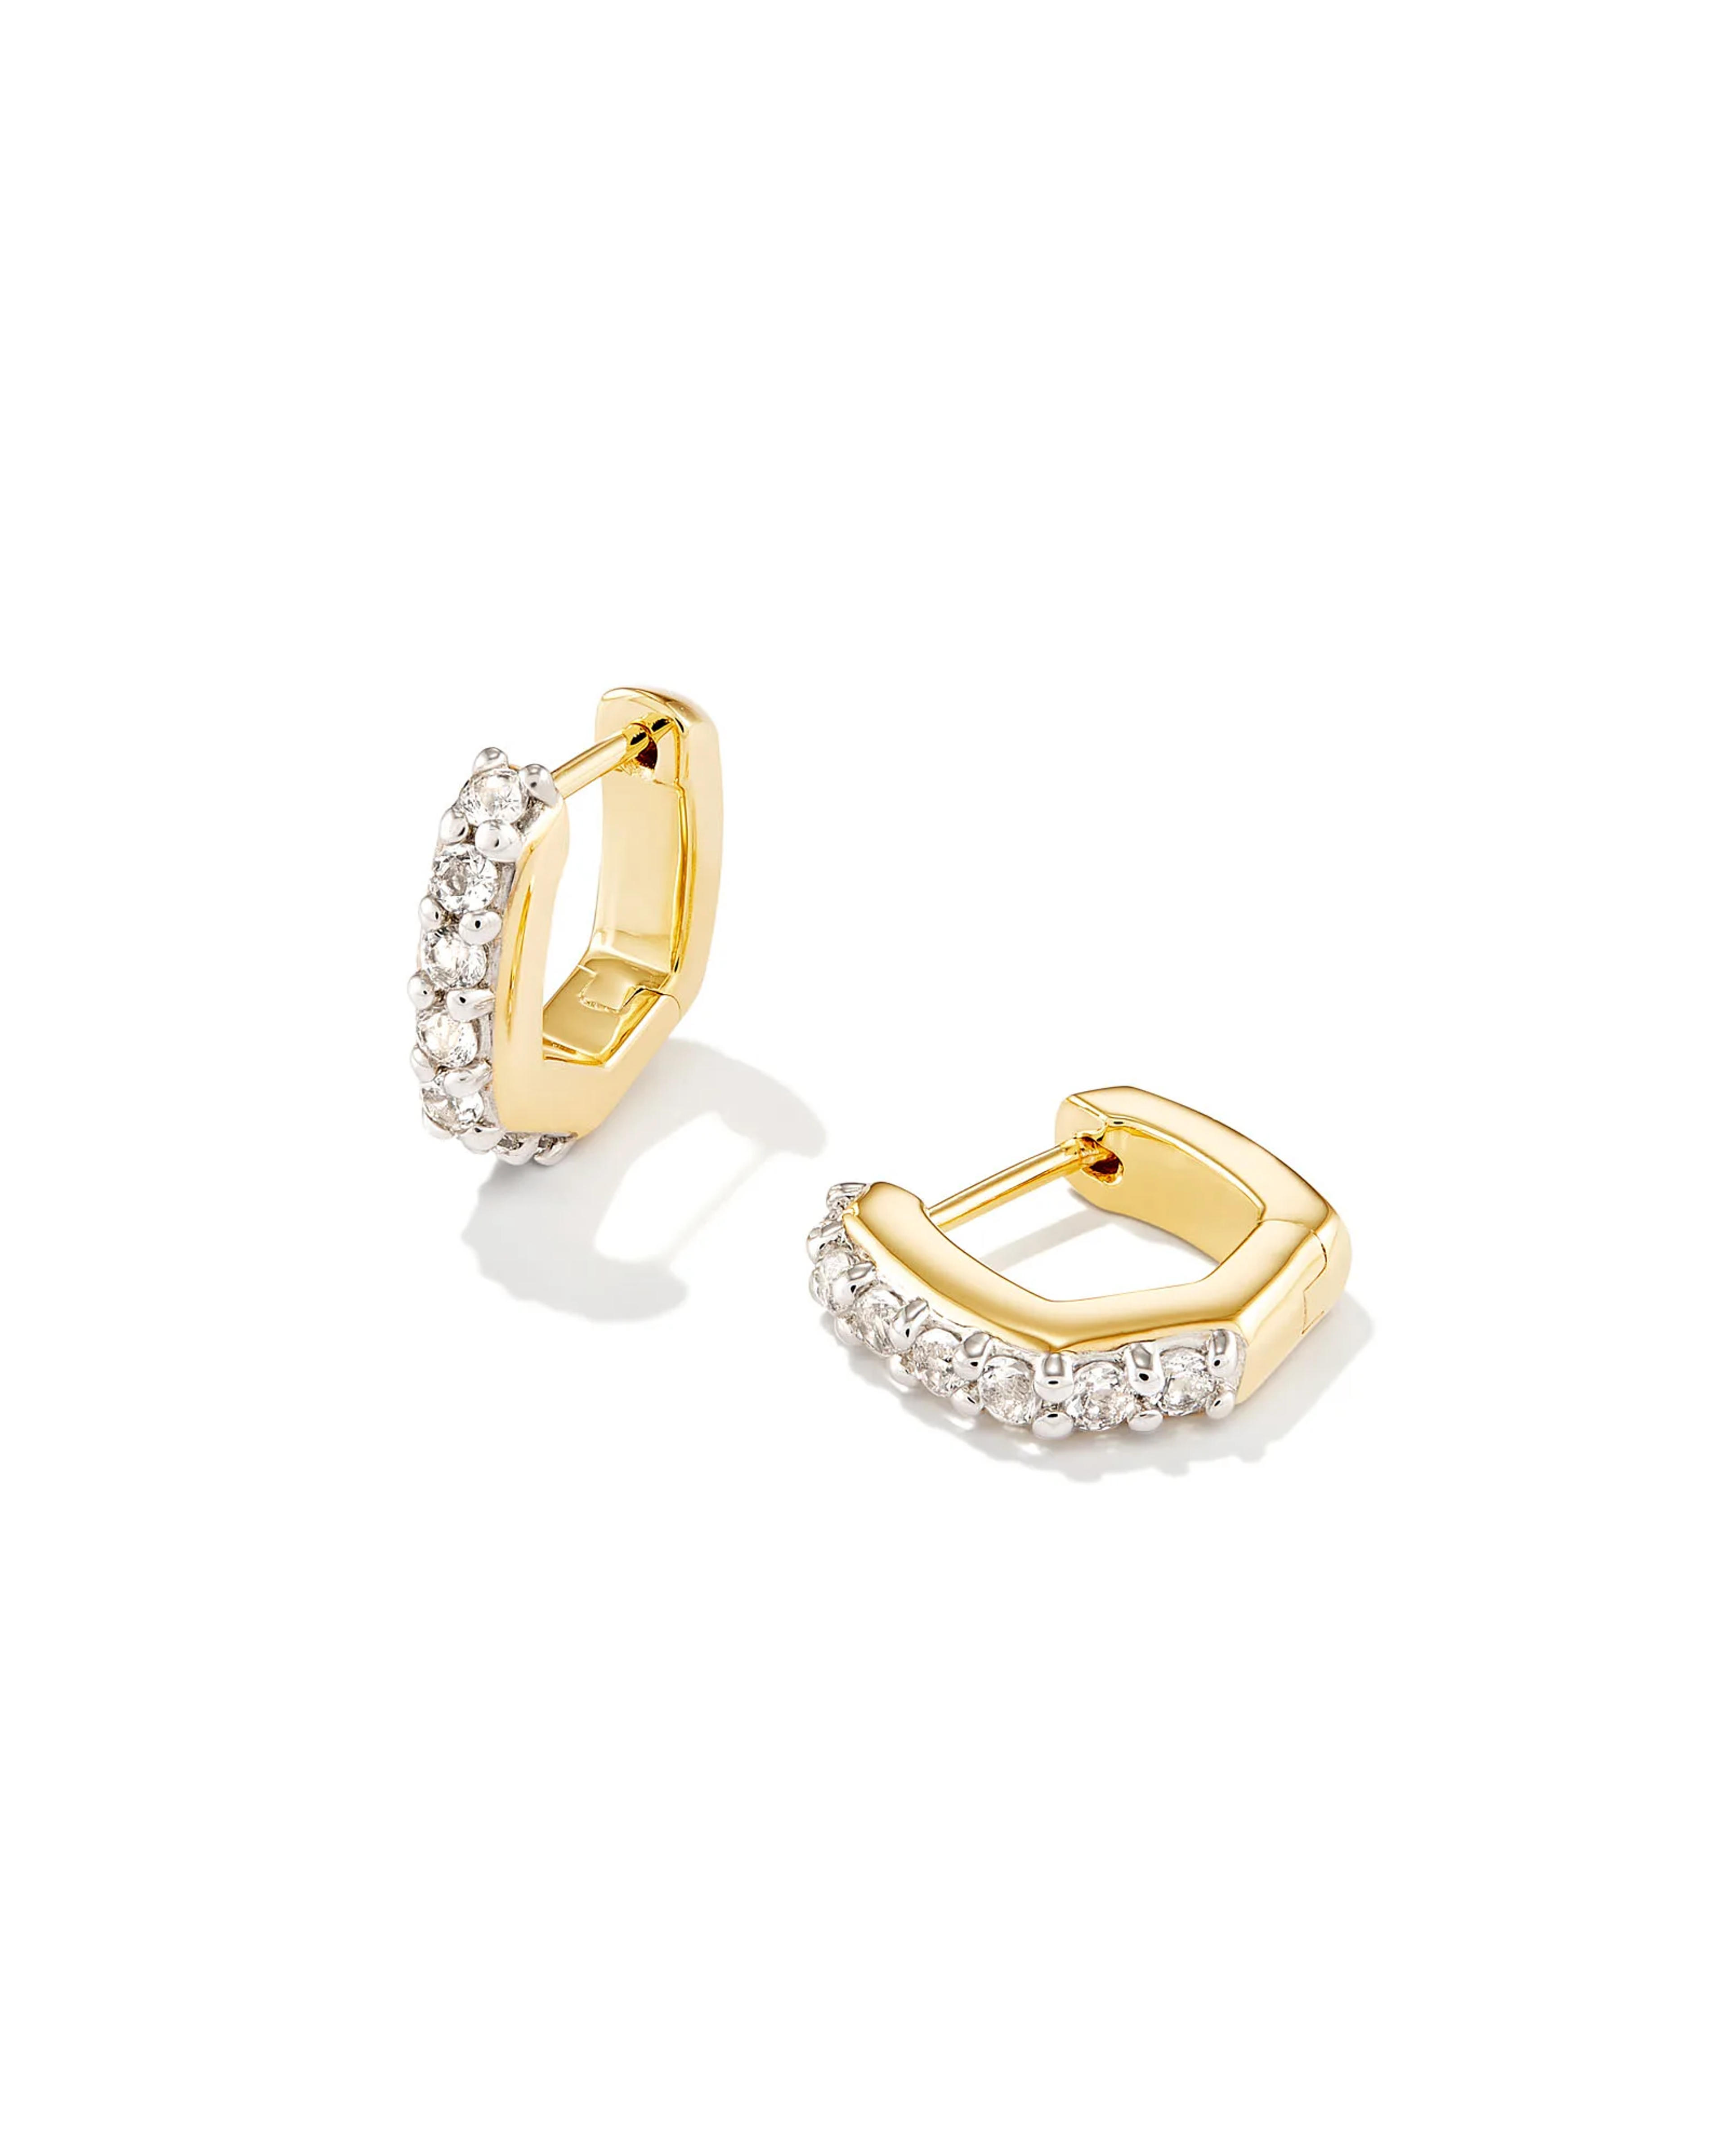 Davie 18k Gold Vermeil Huggie Earrings in White Topaz | Kendra Scott